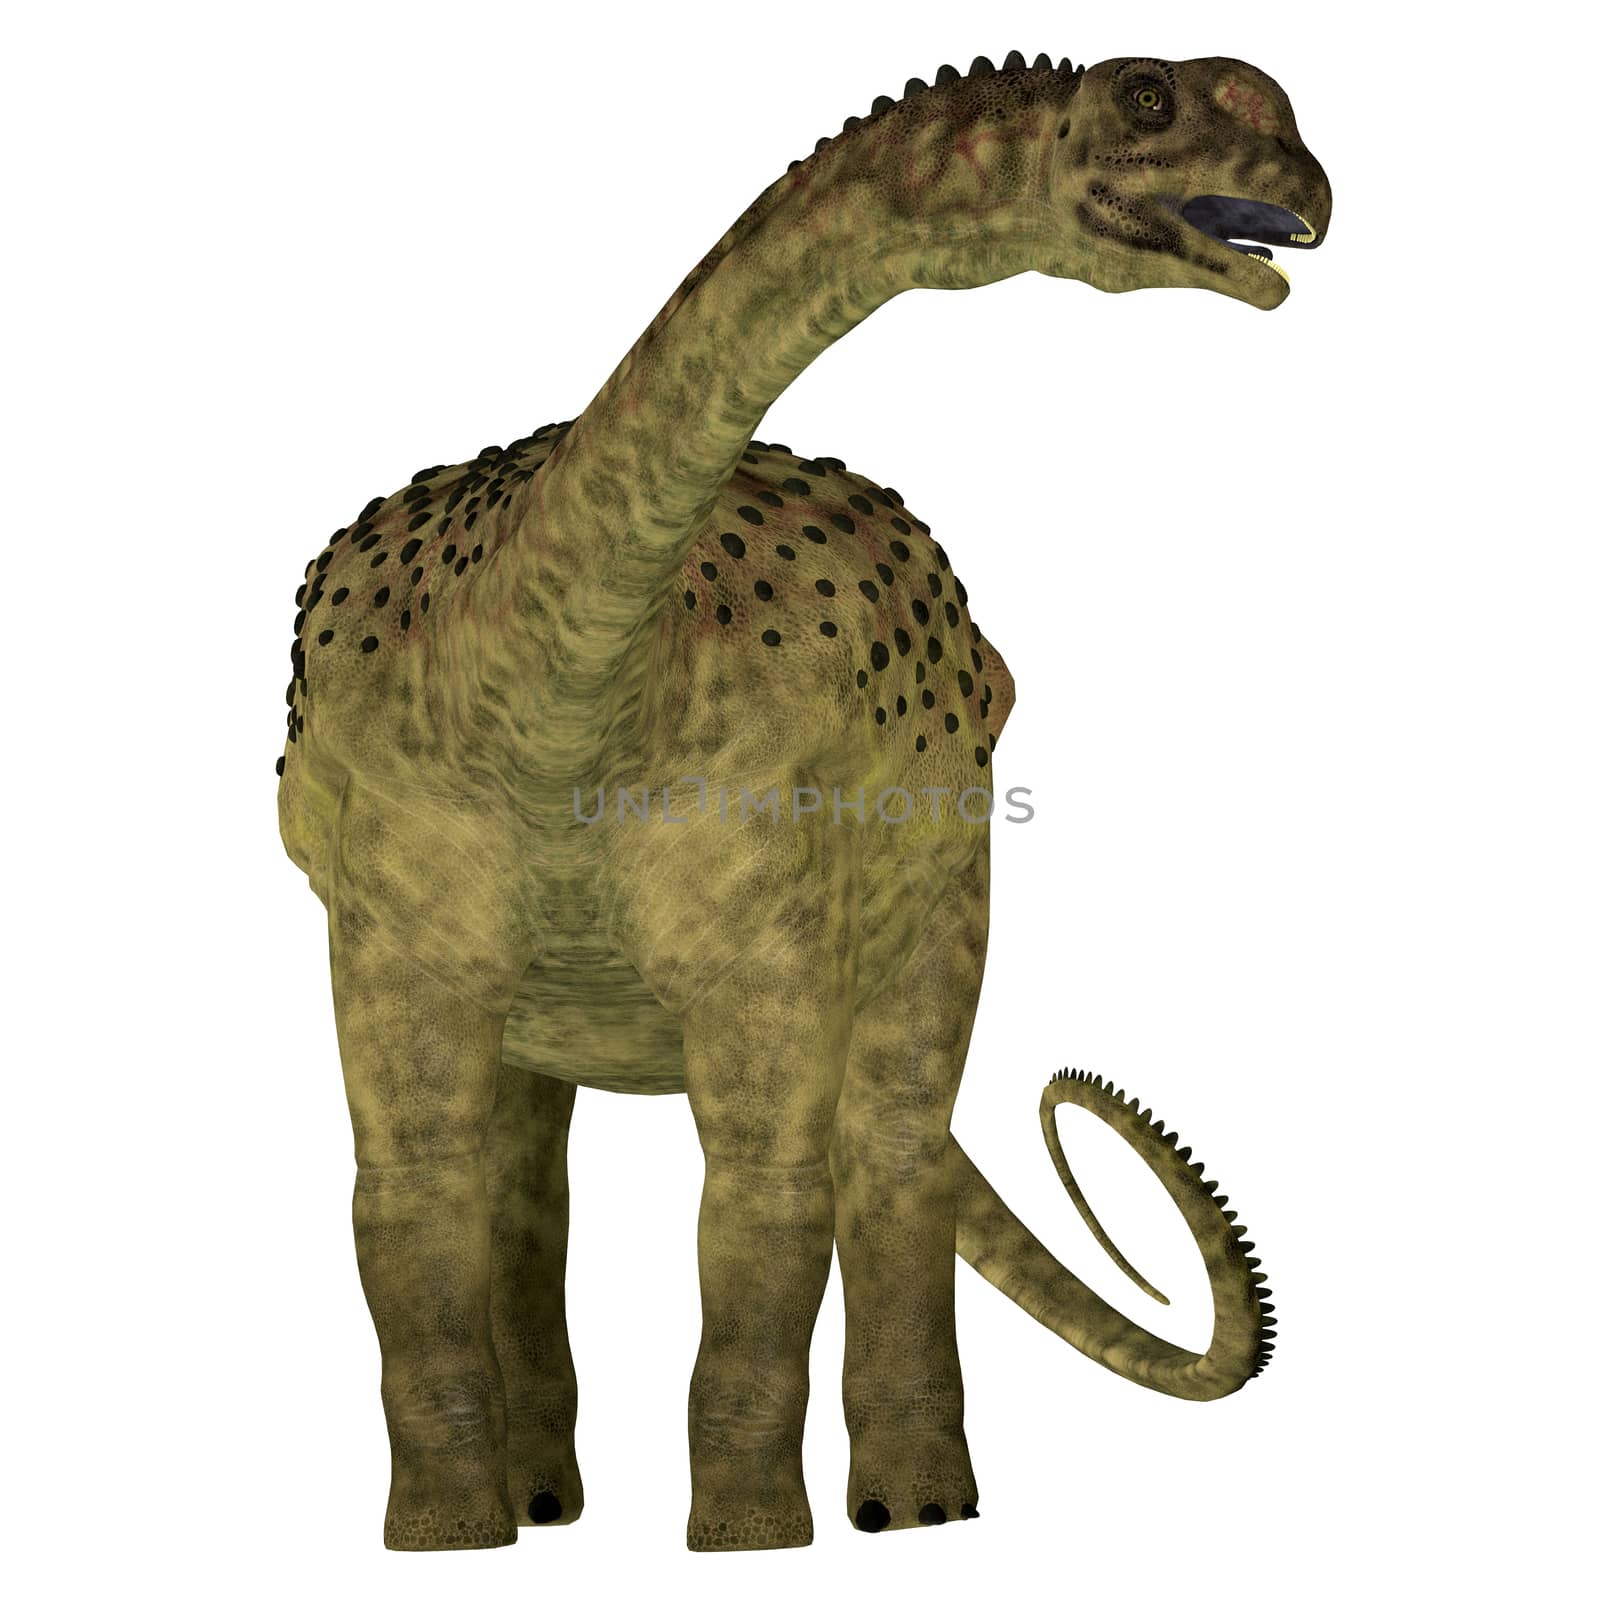 Uberabatitan was a herbivorous sauropod dinosaur that lived in Brazil during the Cretaceous Period.